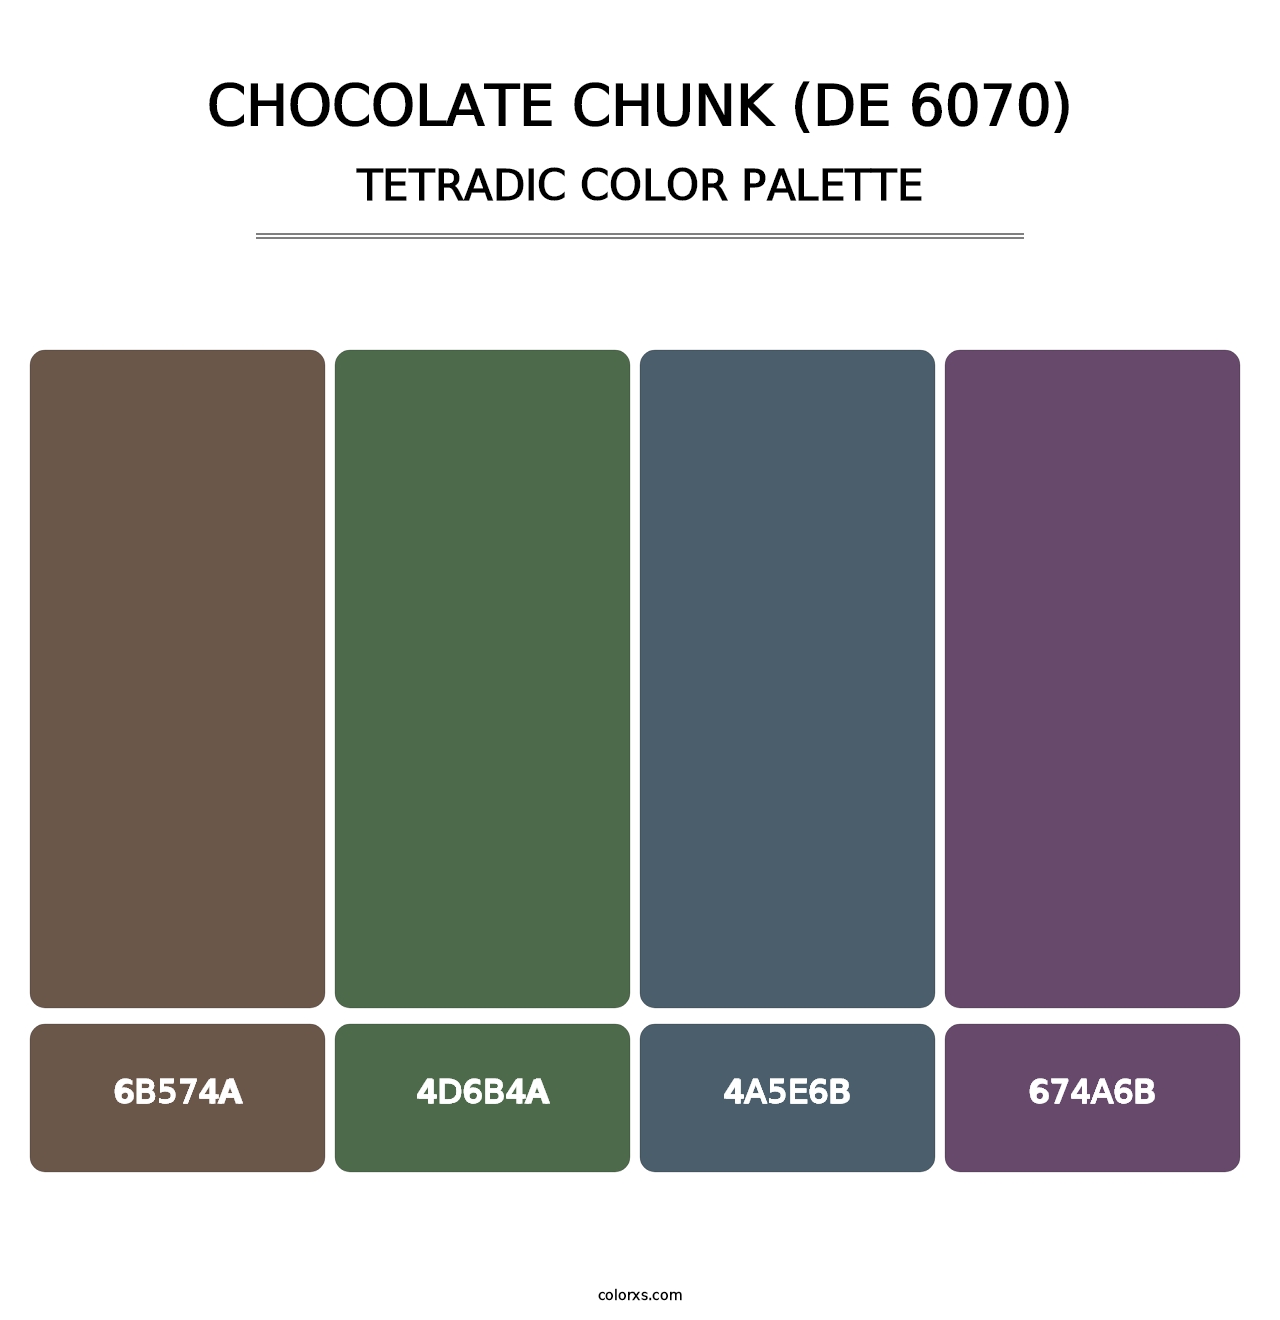 Chocolate Chunk (DE 6070) - Tetradic Color Palette